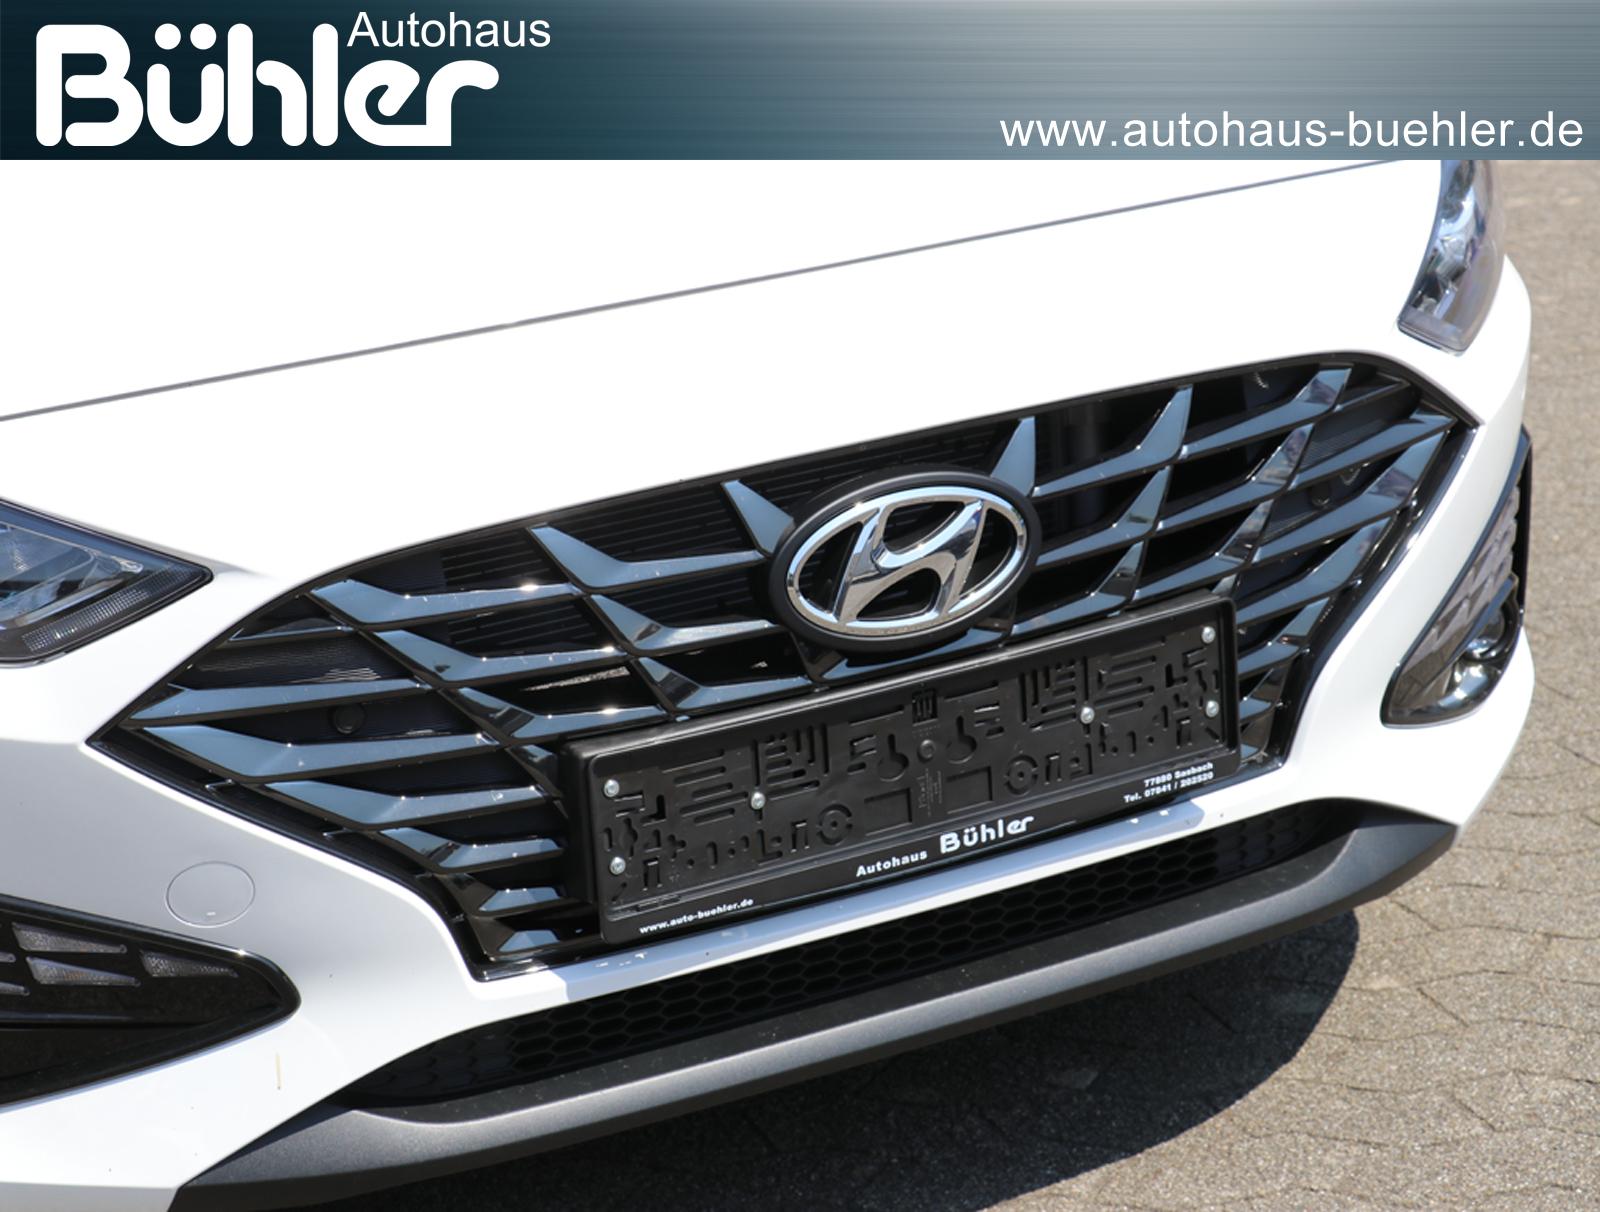 Hyundai i30 Kombi 1.5 T-GDI DCT-Automatik Trend - Serenity White Pearl Metallic